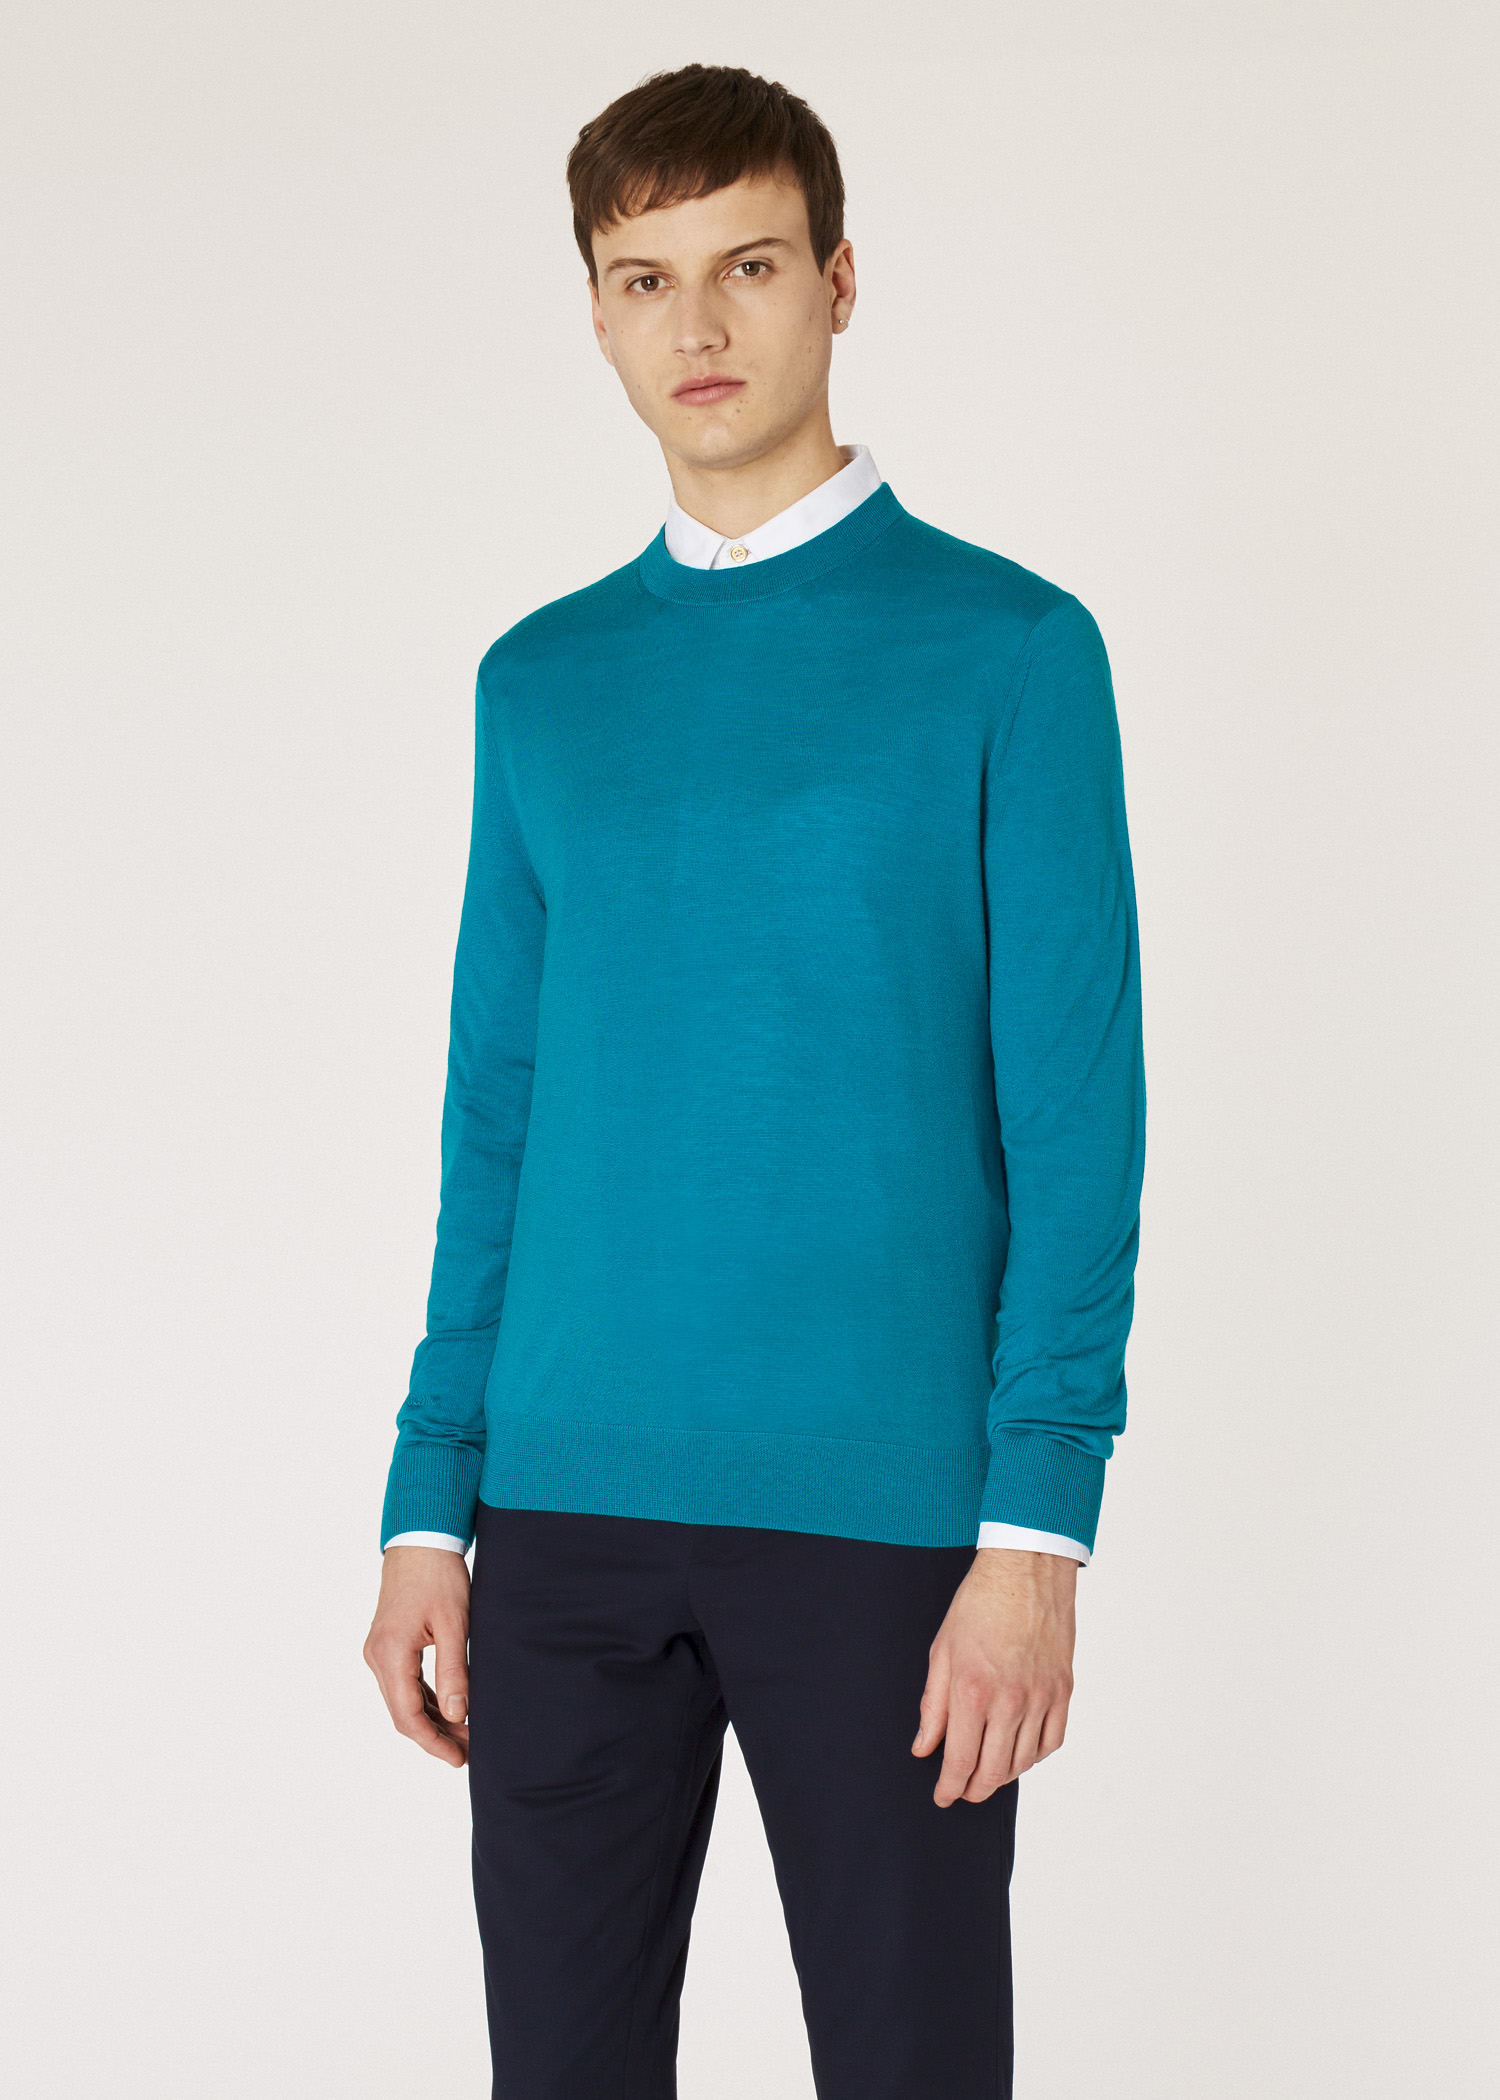 Men's Petrol Blue Merino Wool Sweater - Paul Smith Australia